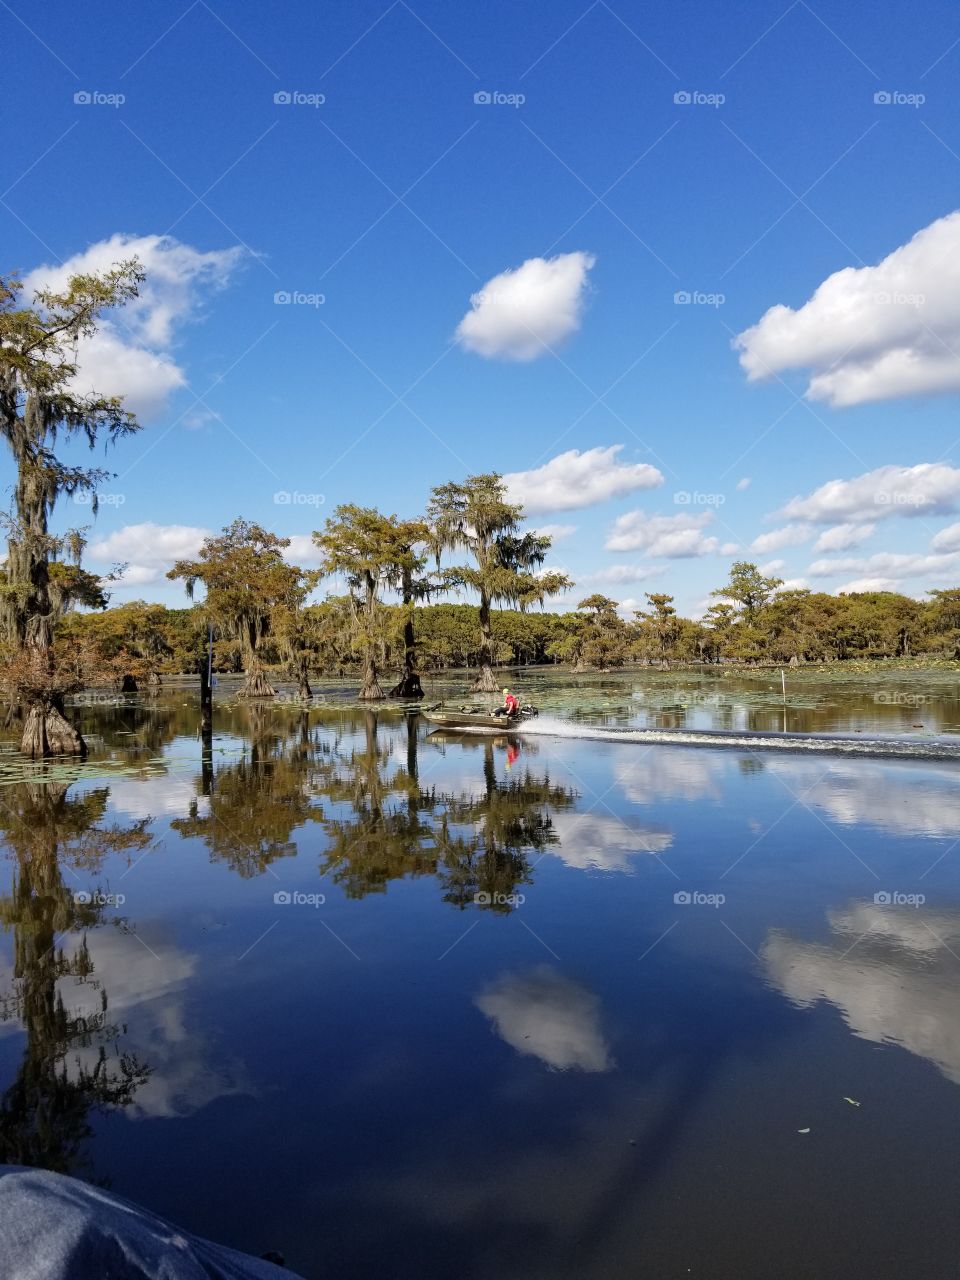 Reflection, Water, Tree, Landscape, Lake